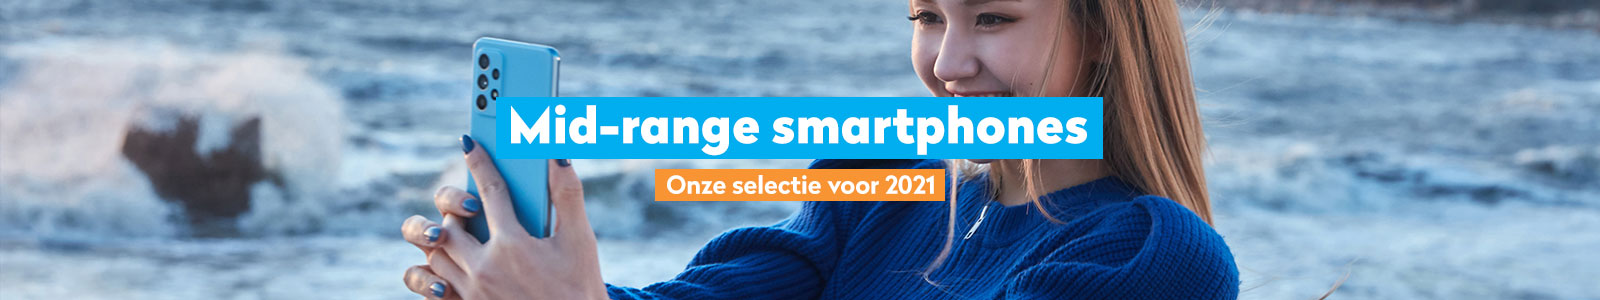 tel-midrange-smartphones-2021-banner-image